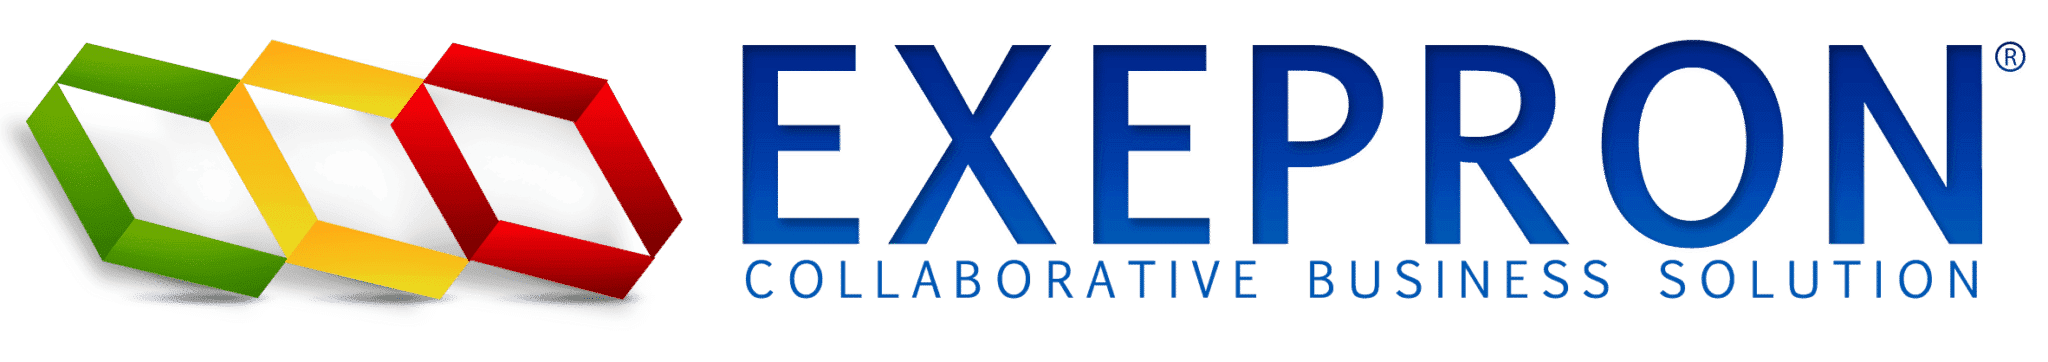 Product Enterprise Solutions - EXEPRON - CCPM Software image